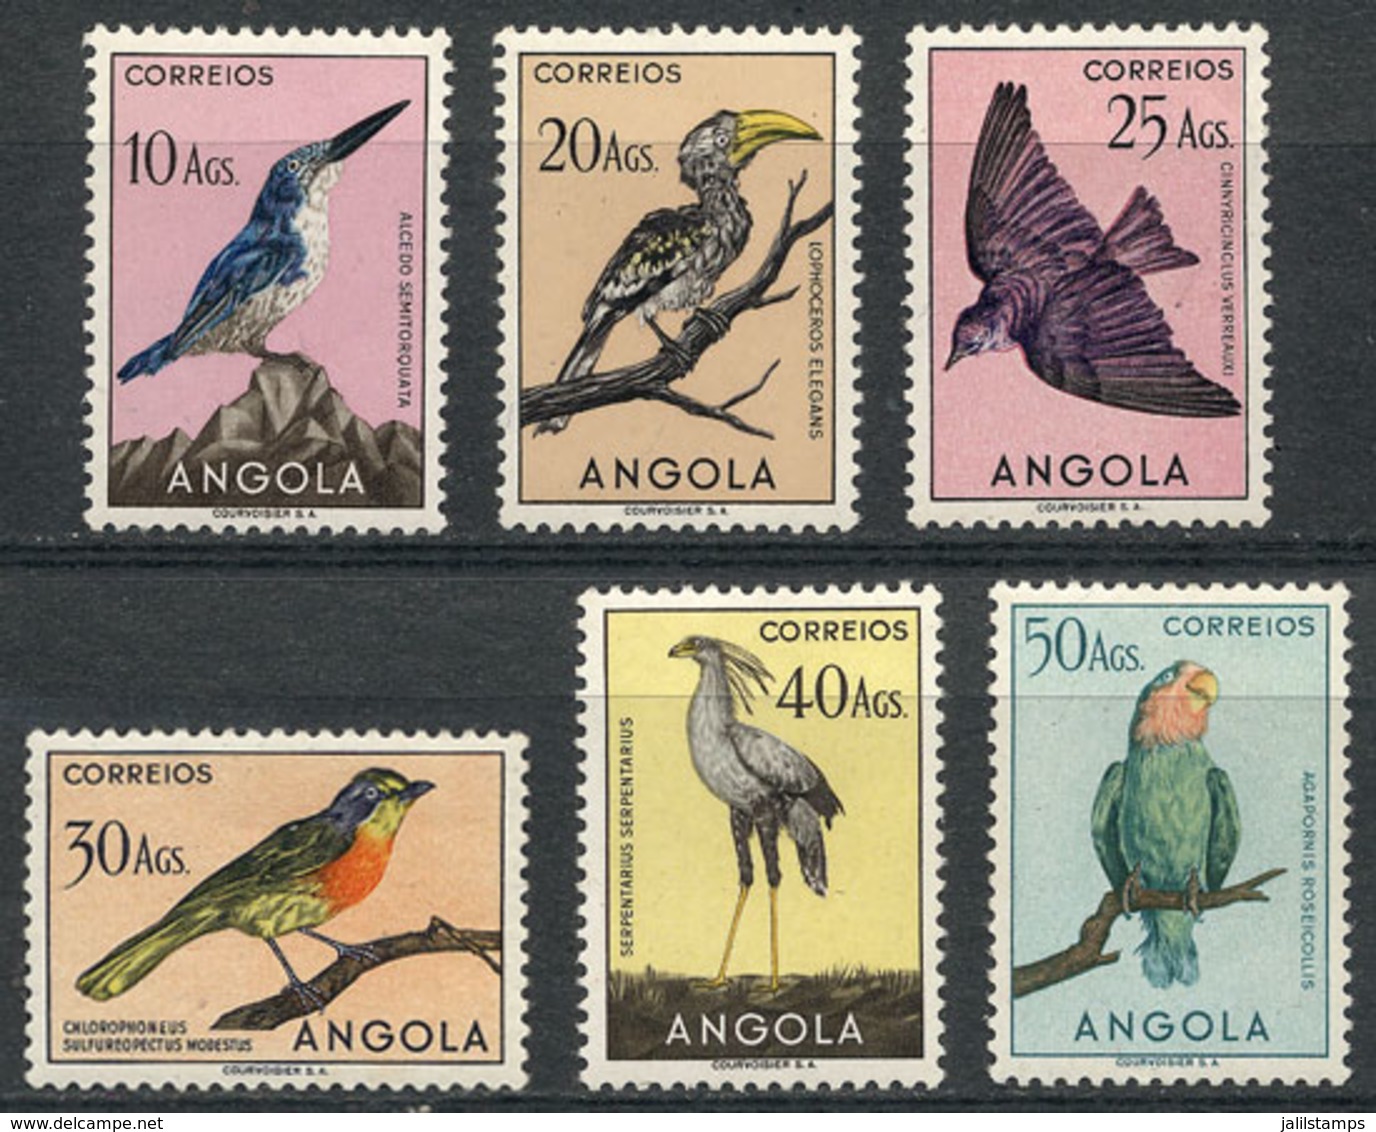 ANGOLA: Sc.349 + 352/6, 1951 Birds, The 6 Key Values Of The Set, Unmounted, Very Fine Quality, Catalog Value US$ - Angola